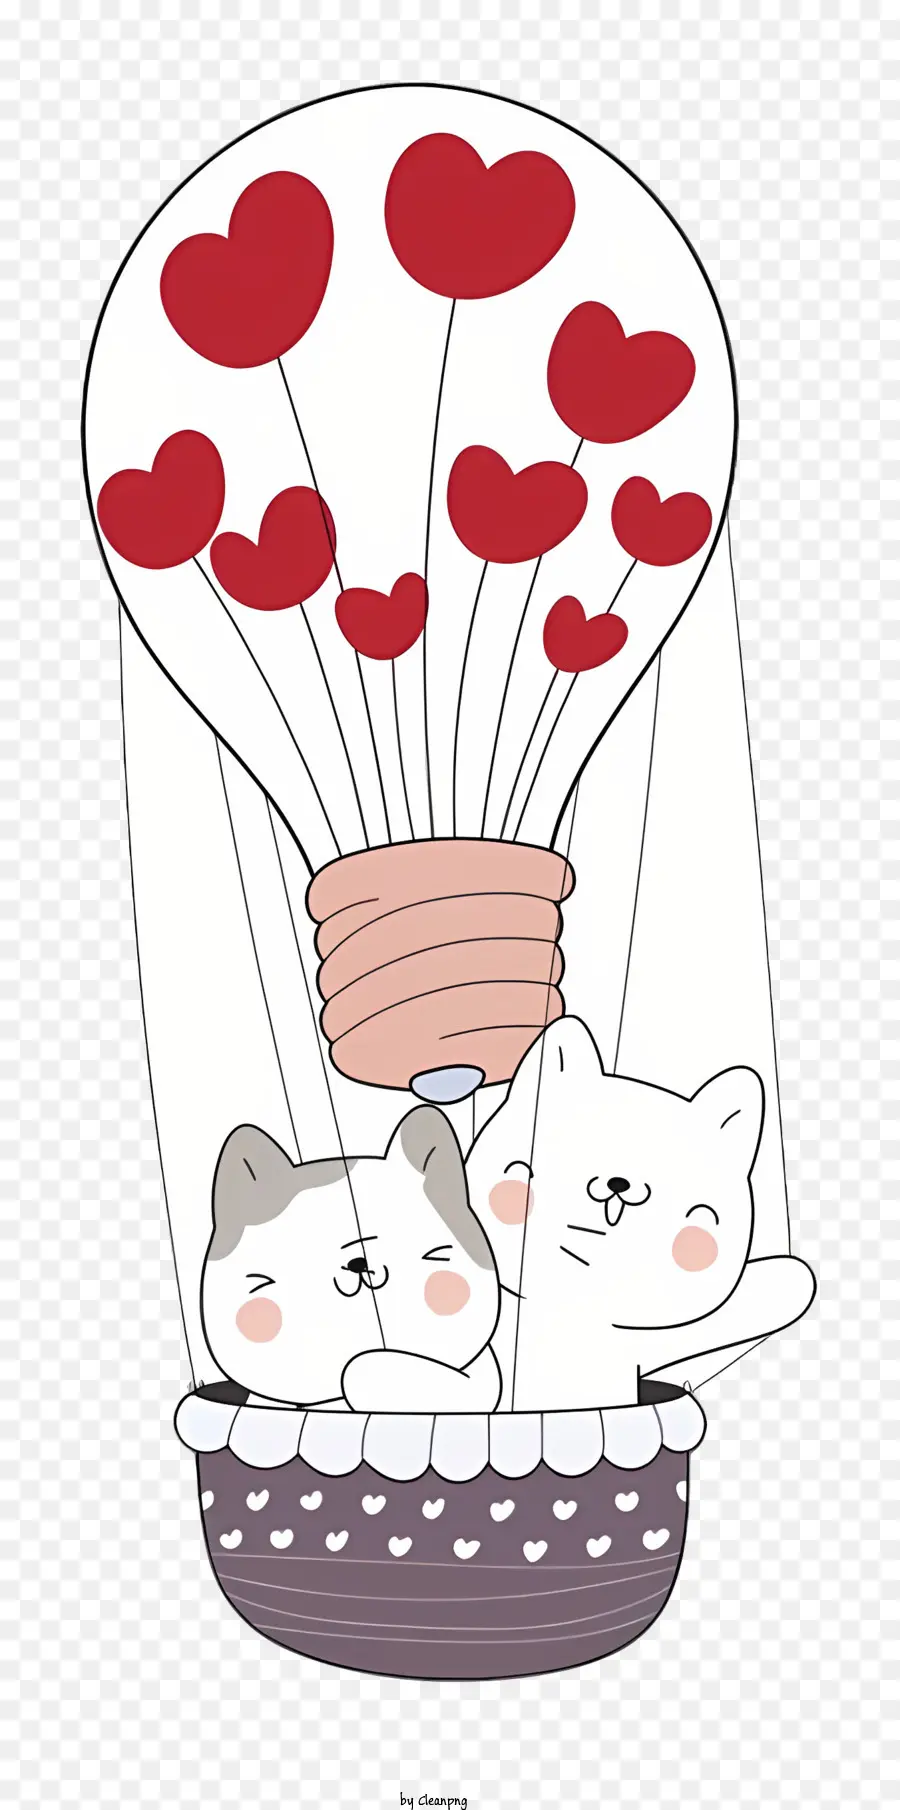 Heißluftballon - Zwei Katzen im Ballon, umgeben von Herzen umgeben